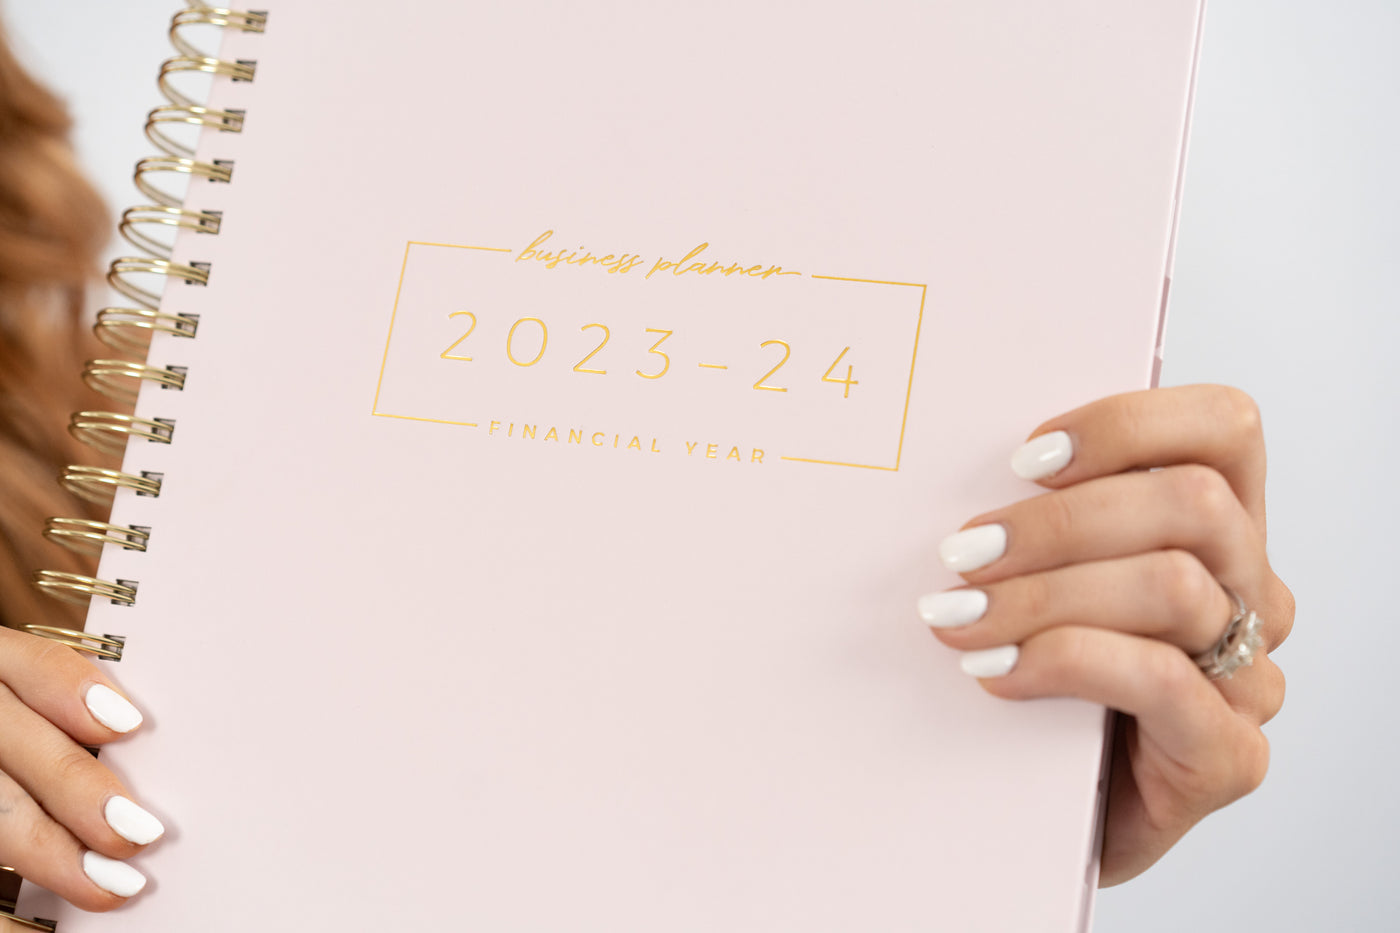 2023/24 Financial Year Business Planner - Blush